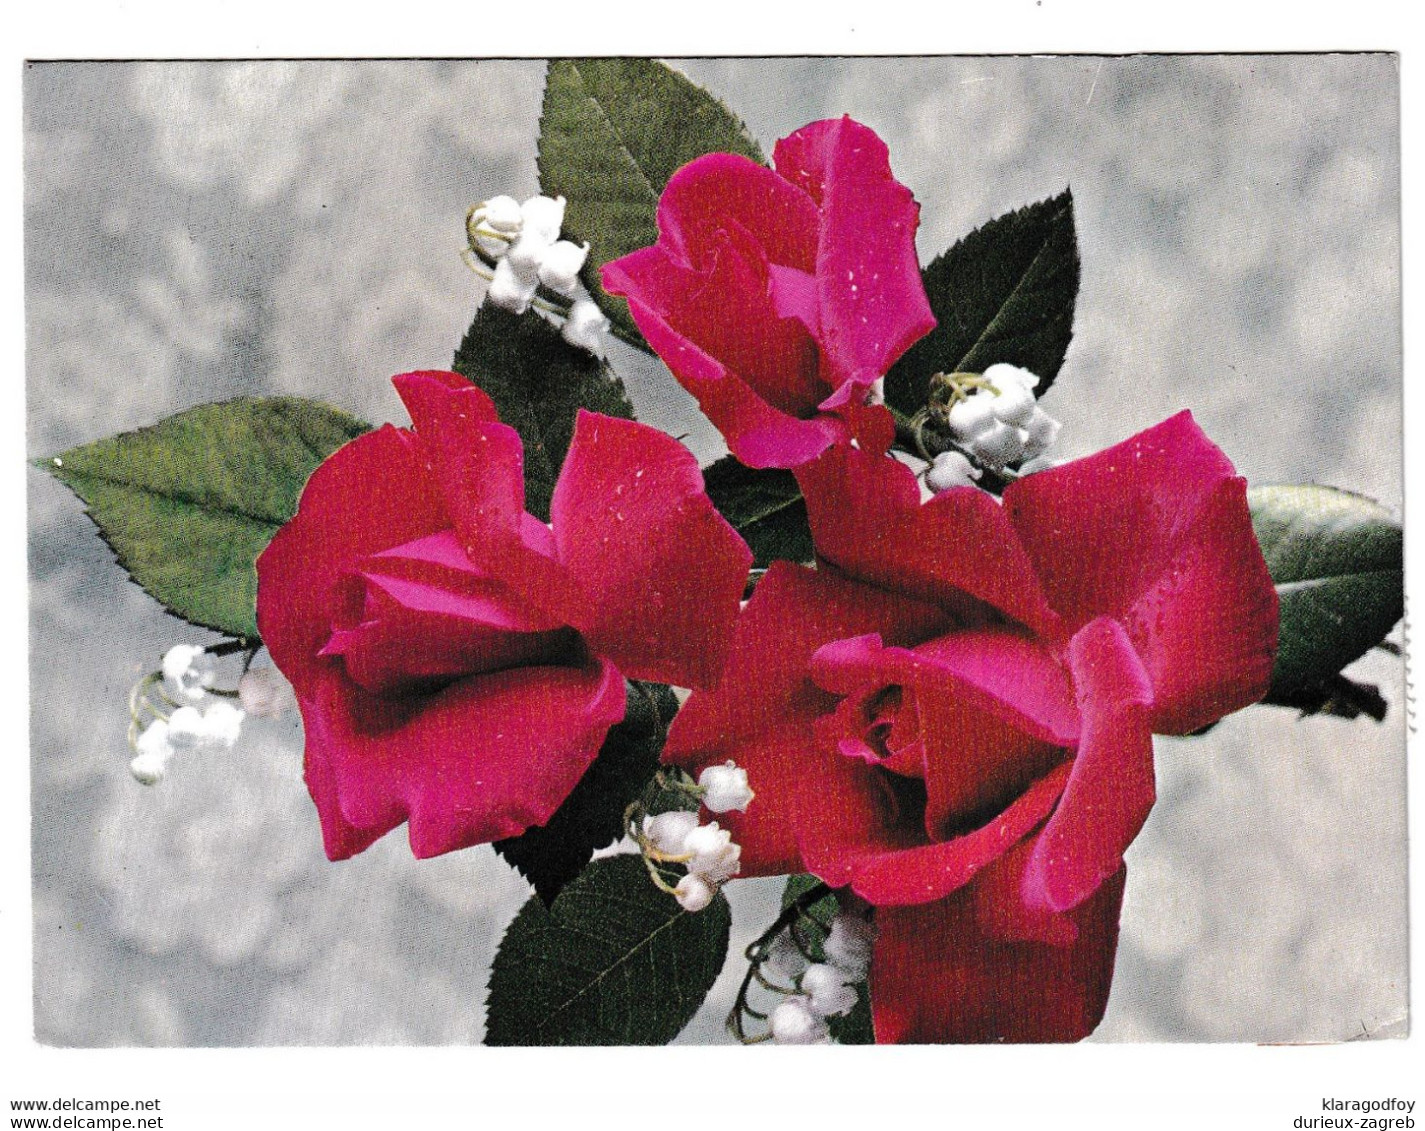 Yugoslavia Multifranked Roses Postcard Posted Registered 1979 Feketić To Germany B210410 - Storia Postale